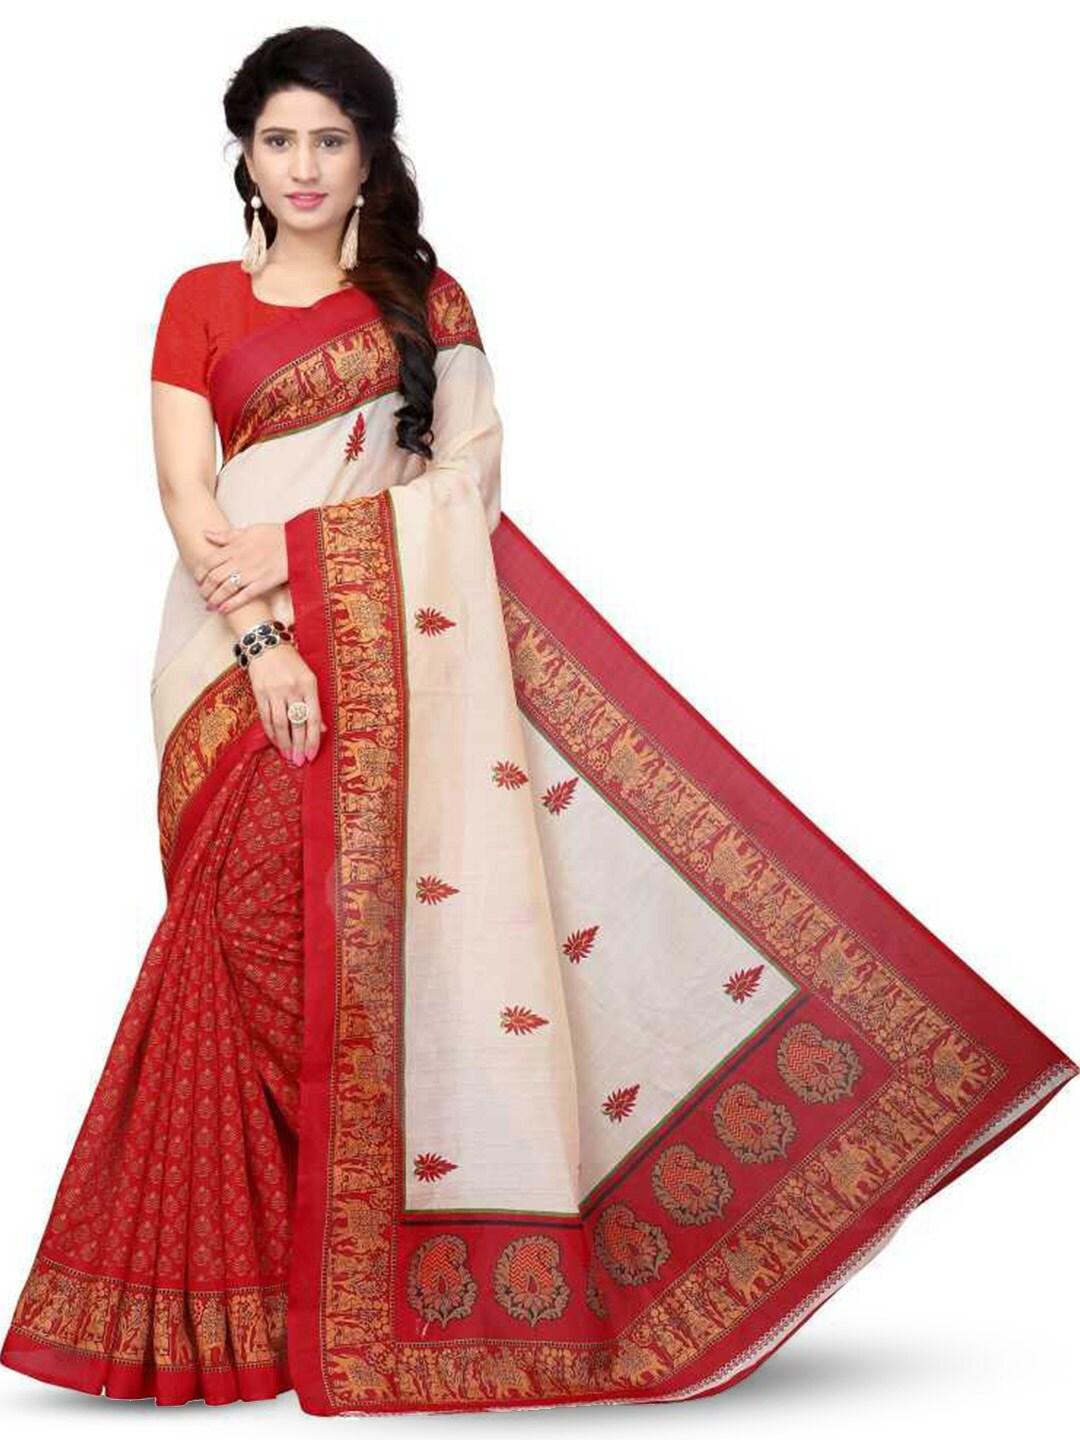 mitera cream-coloured & red ethnic motifs printed saree